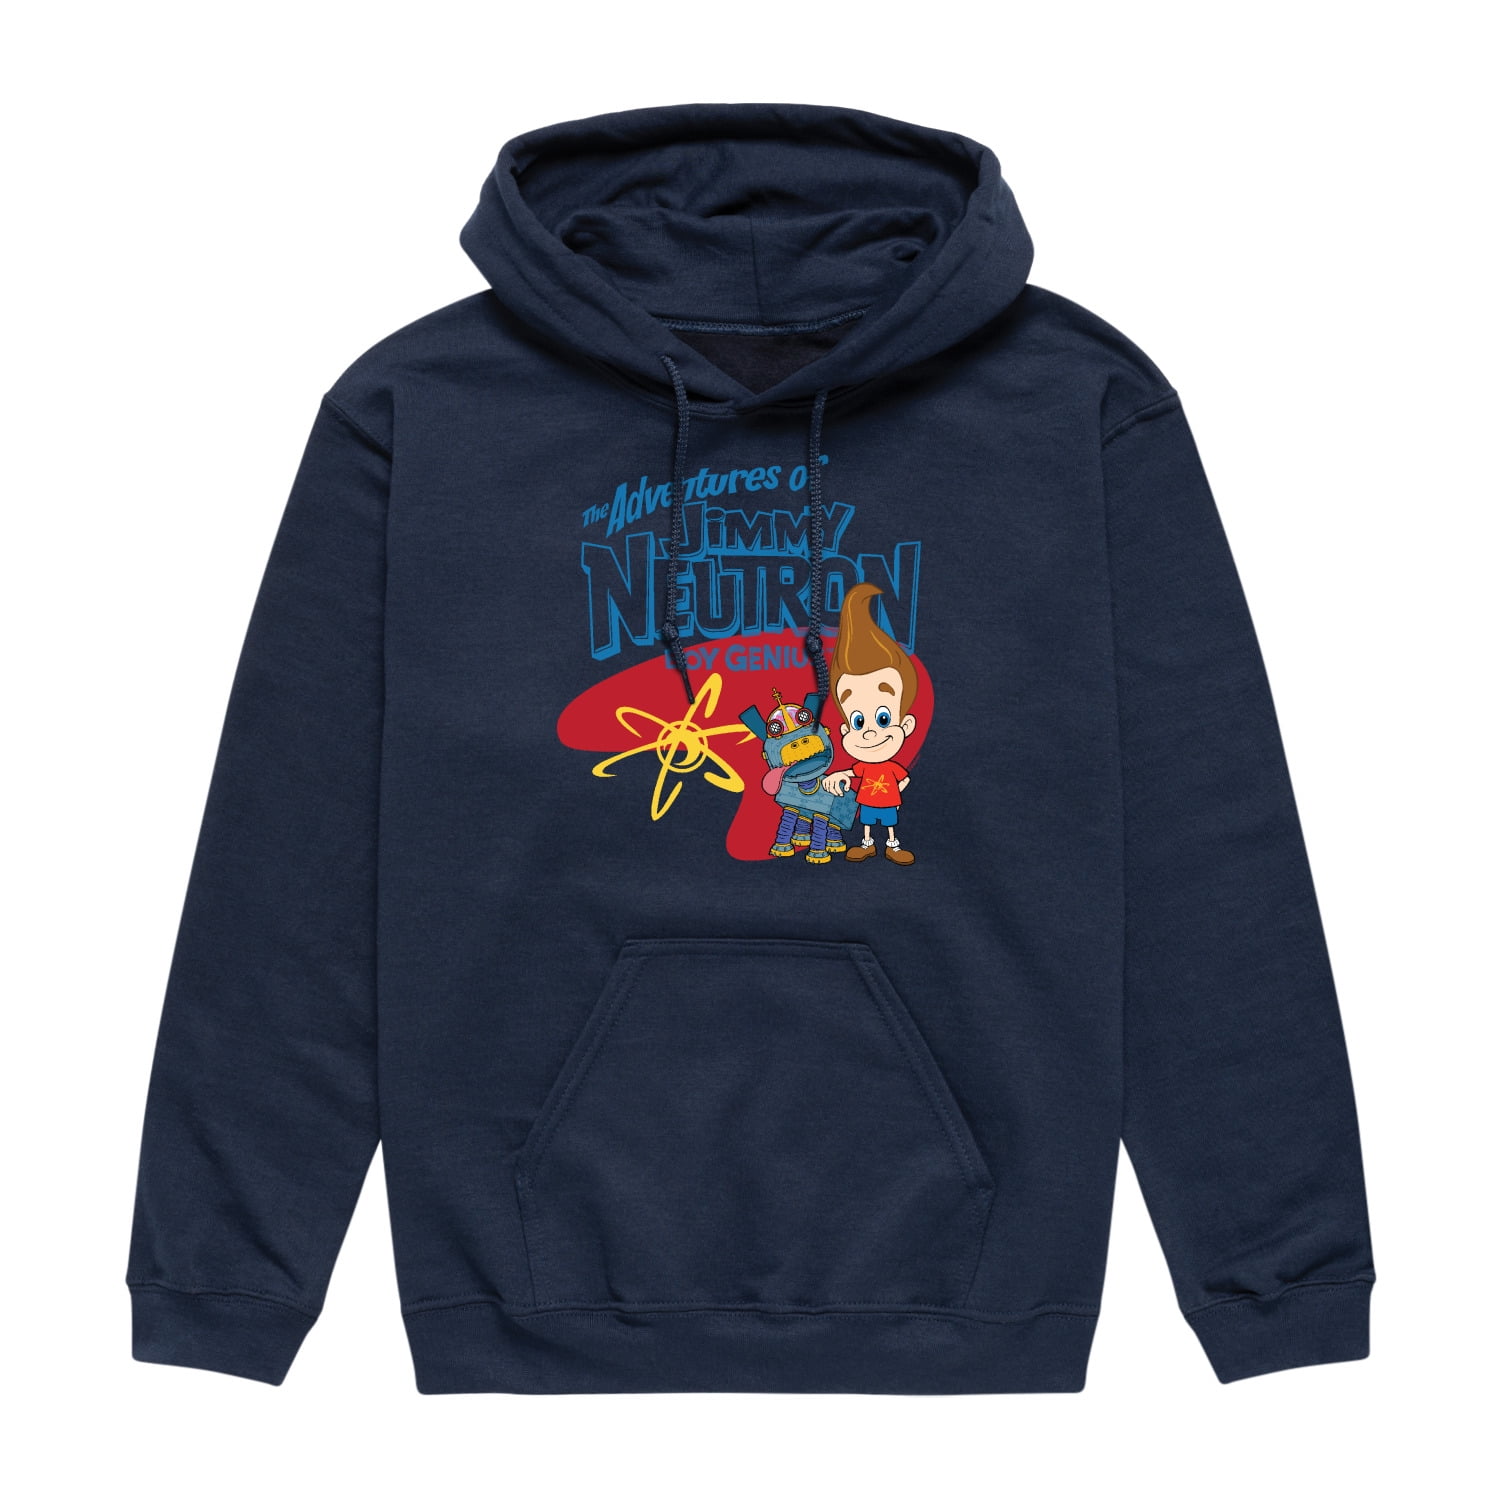 Jimmy Neutron - Adventures of Jimmy Neutron - Men's Pullover Hooded Fleece  Sweatshirt